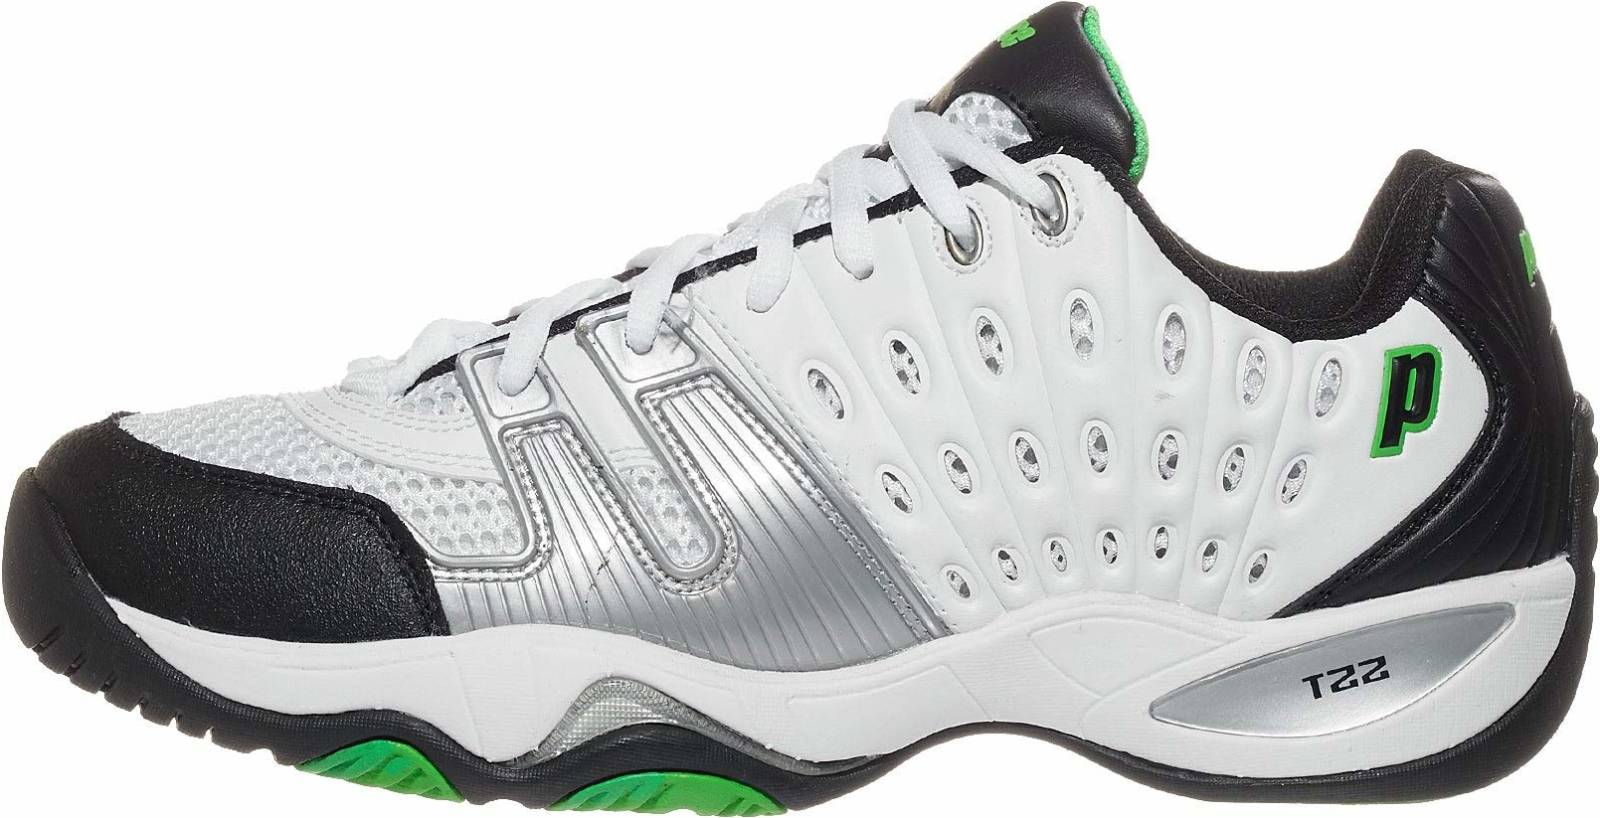 Brand New! Green/Black Prince WARRIOR LITE Men's Tennis Shoes 